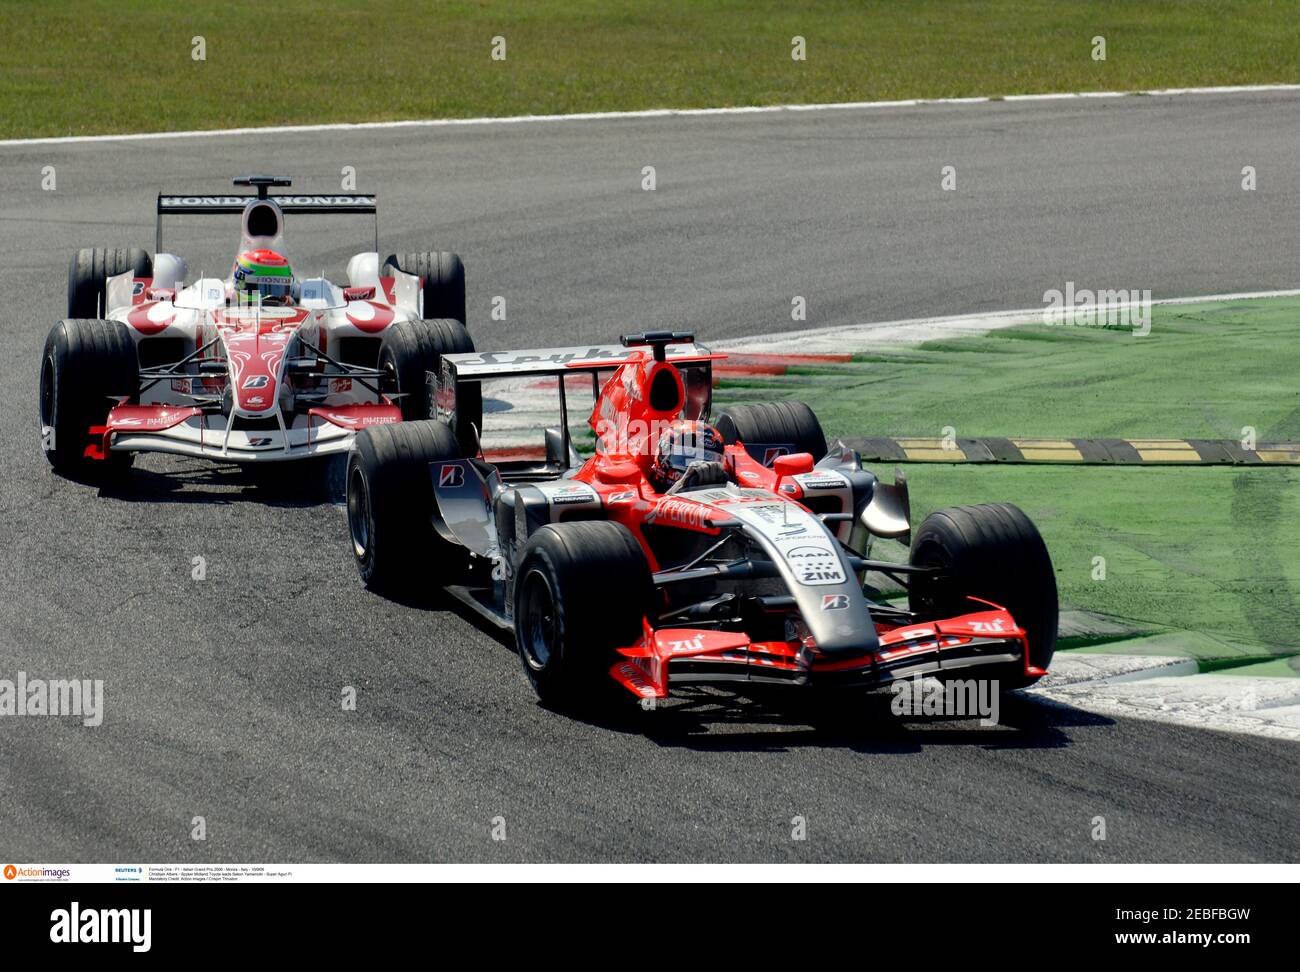 Formula One - F1 - Italian Grand Prix 2006 - Monza - Italy - 10/9/06  Christijan Albers - Spyker Midland Toyota leads Sakon Yamamoto - Super  Aguri FI Mandatory Credit: Action Images / Crispin Thruston Stock Photo -  Alamy